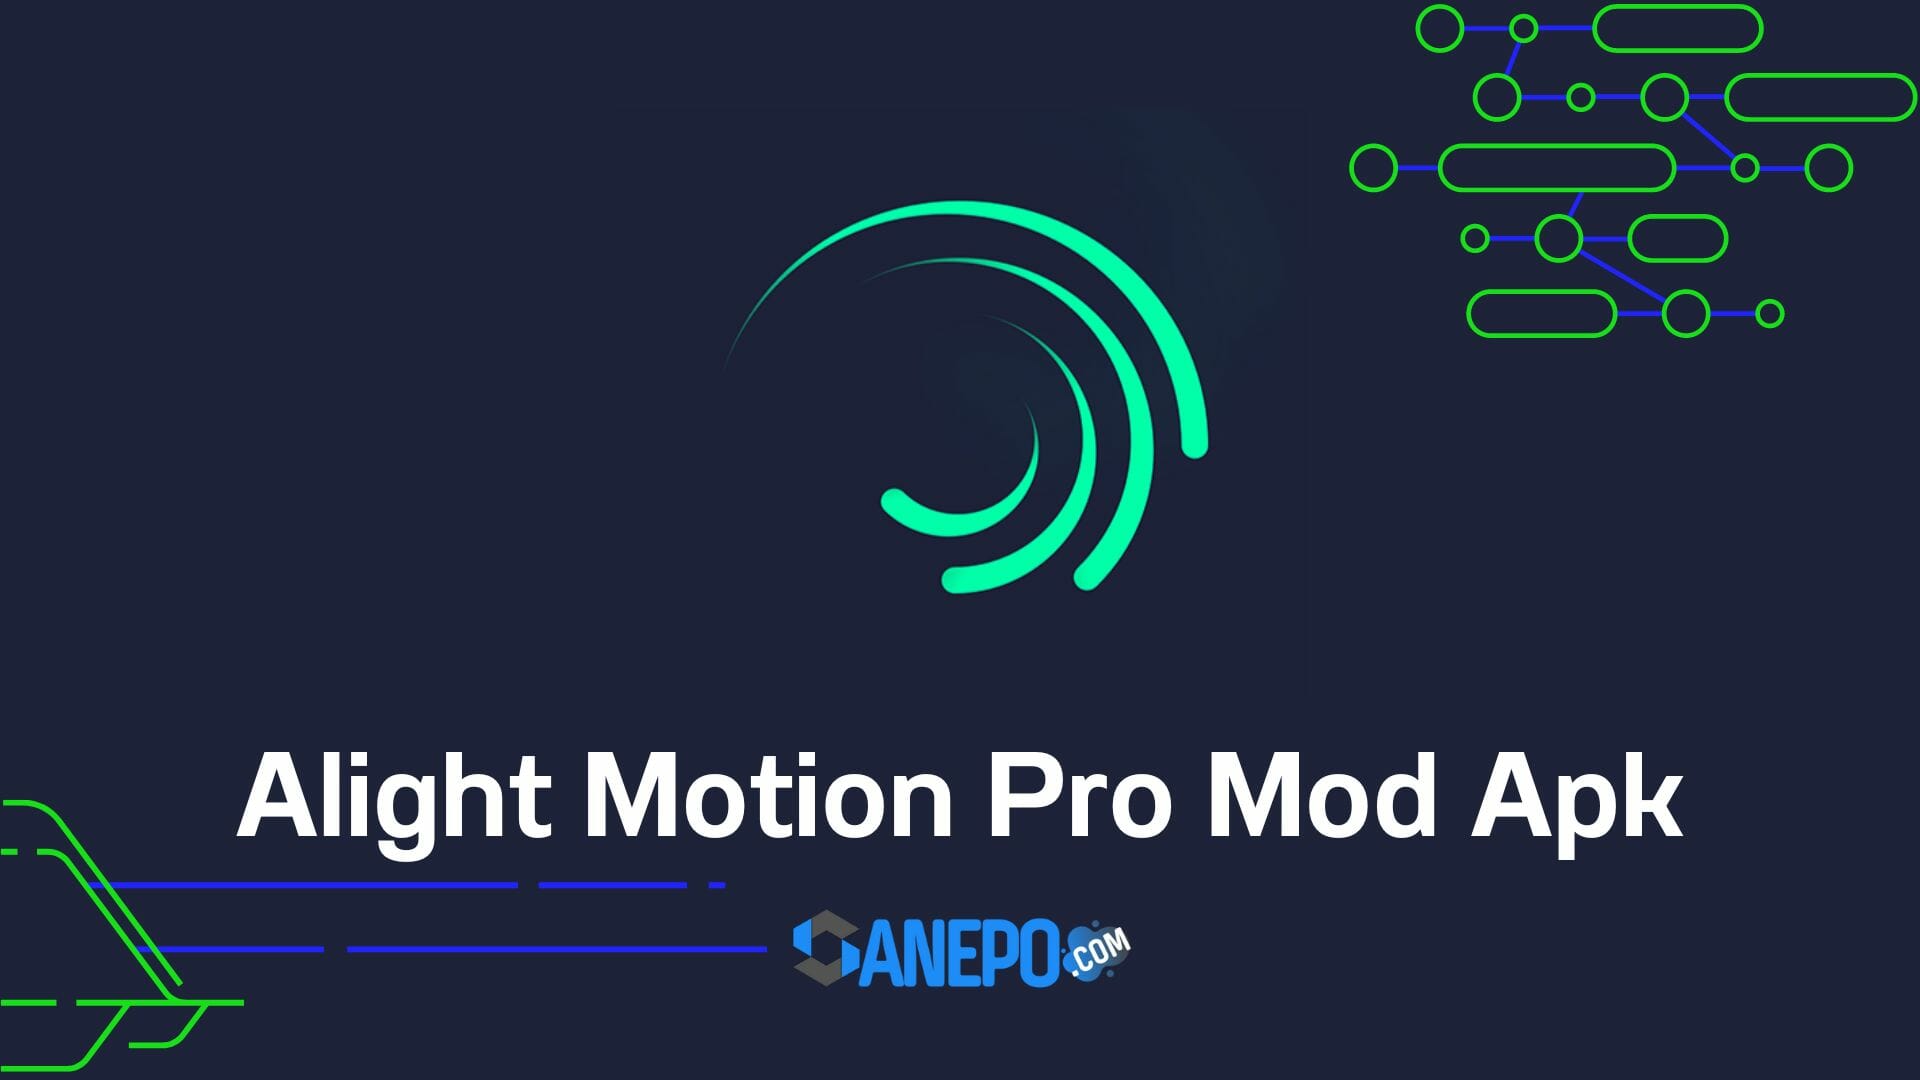 Alight Motion Pro Mod Apk versi terbaru 2022